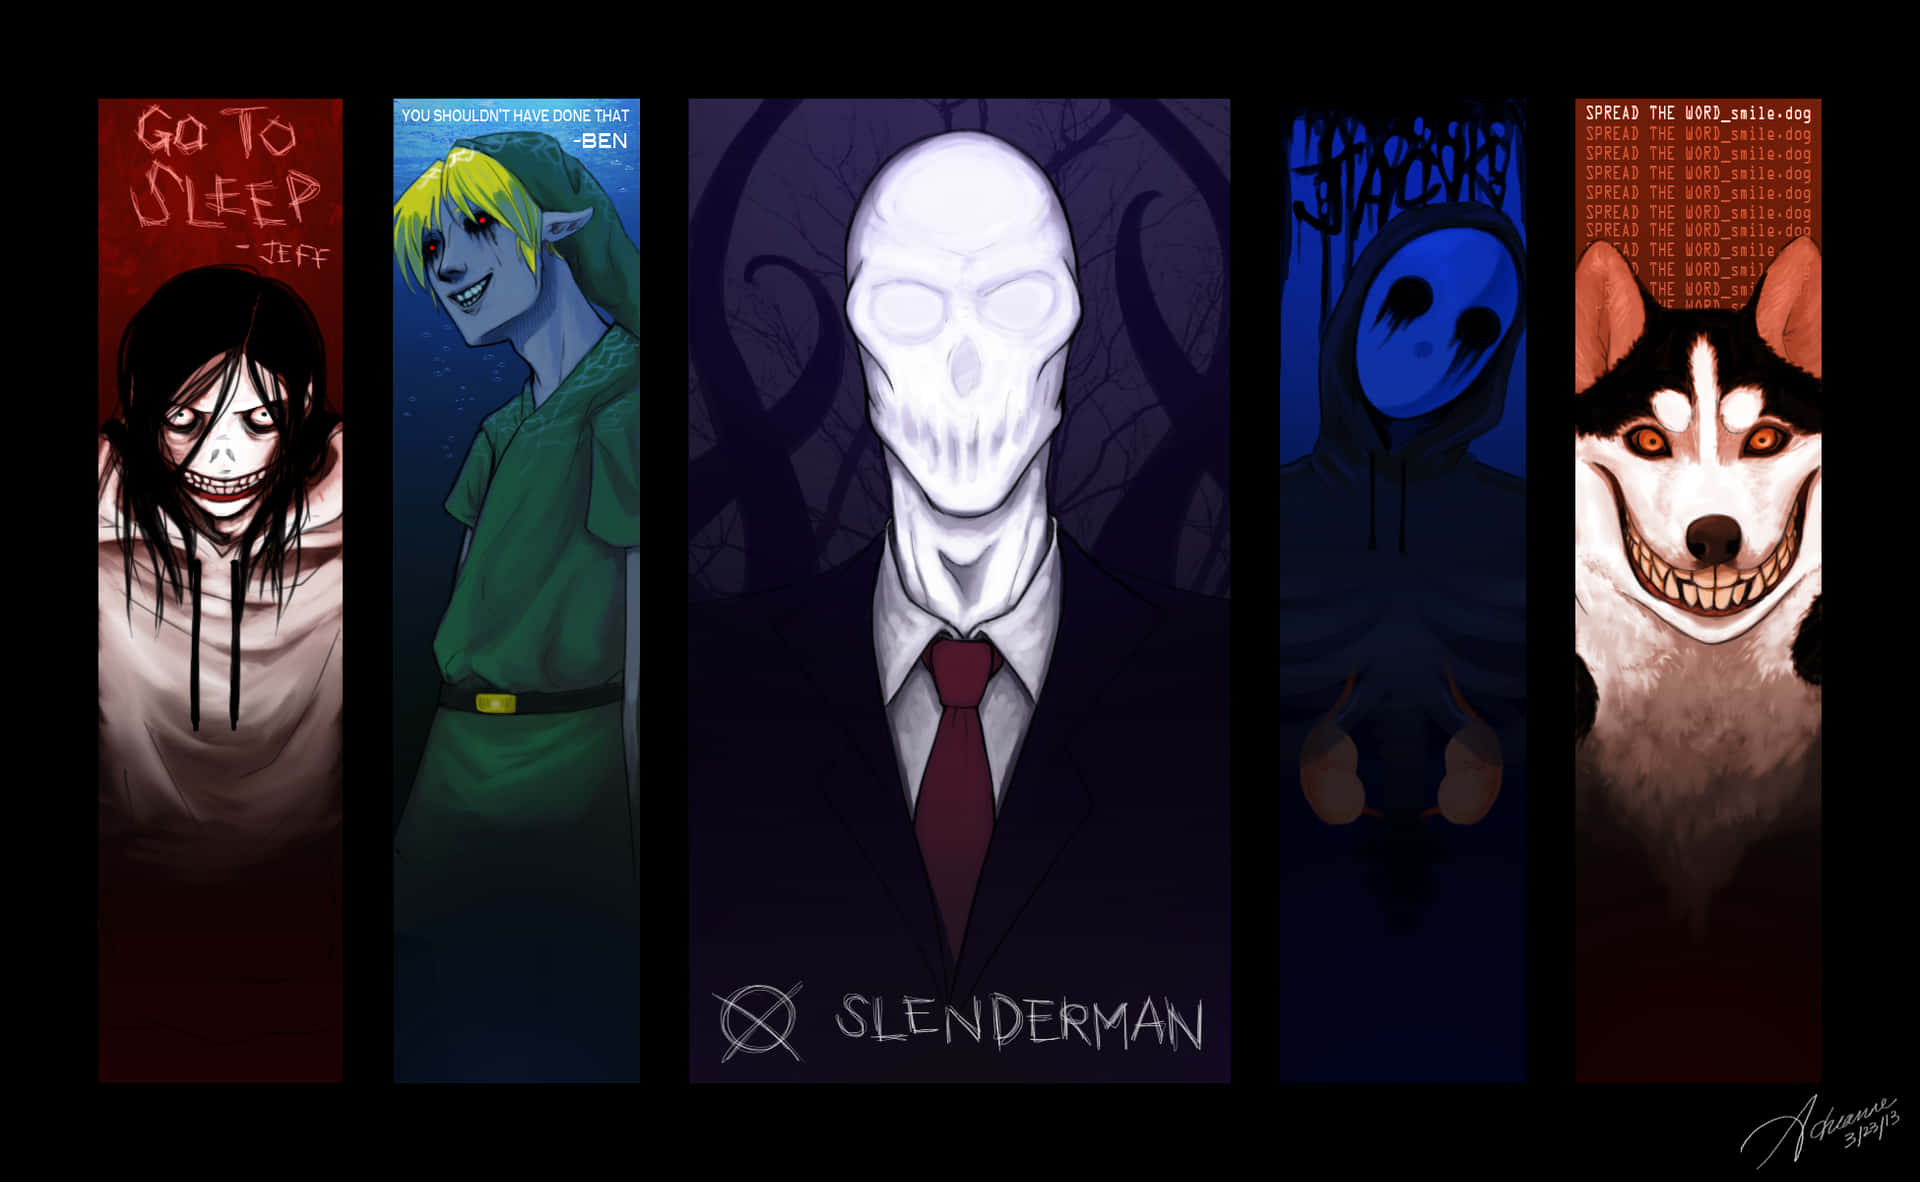 Jeff the Killer, CreepyPasta Character pics (both animated and real life  versions)